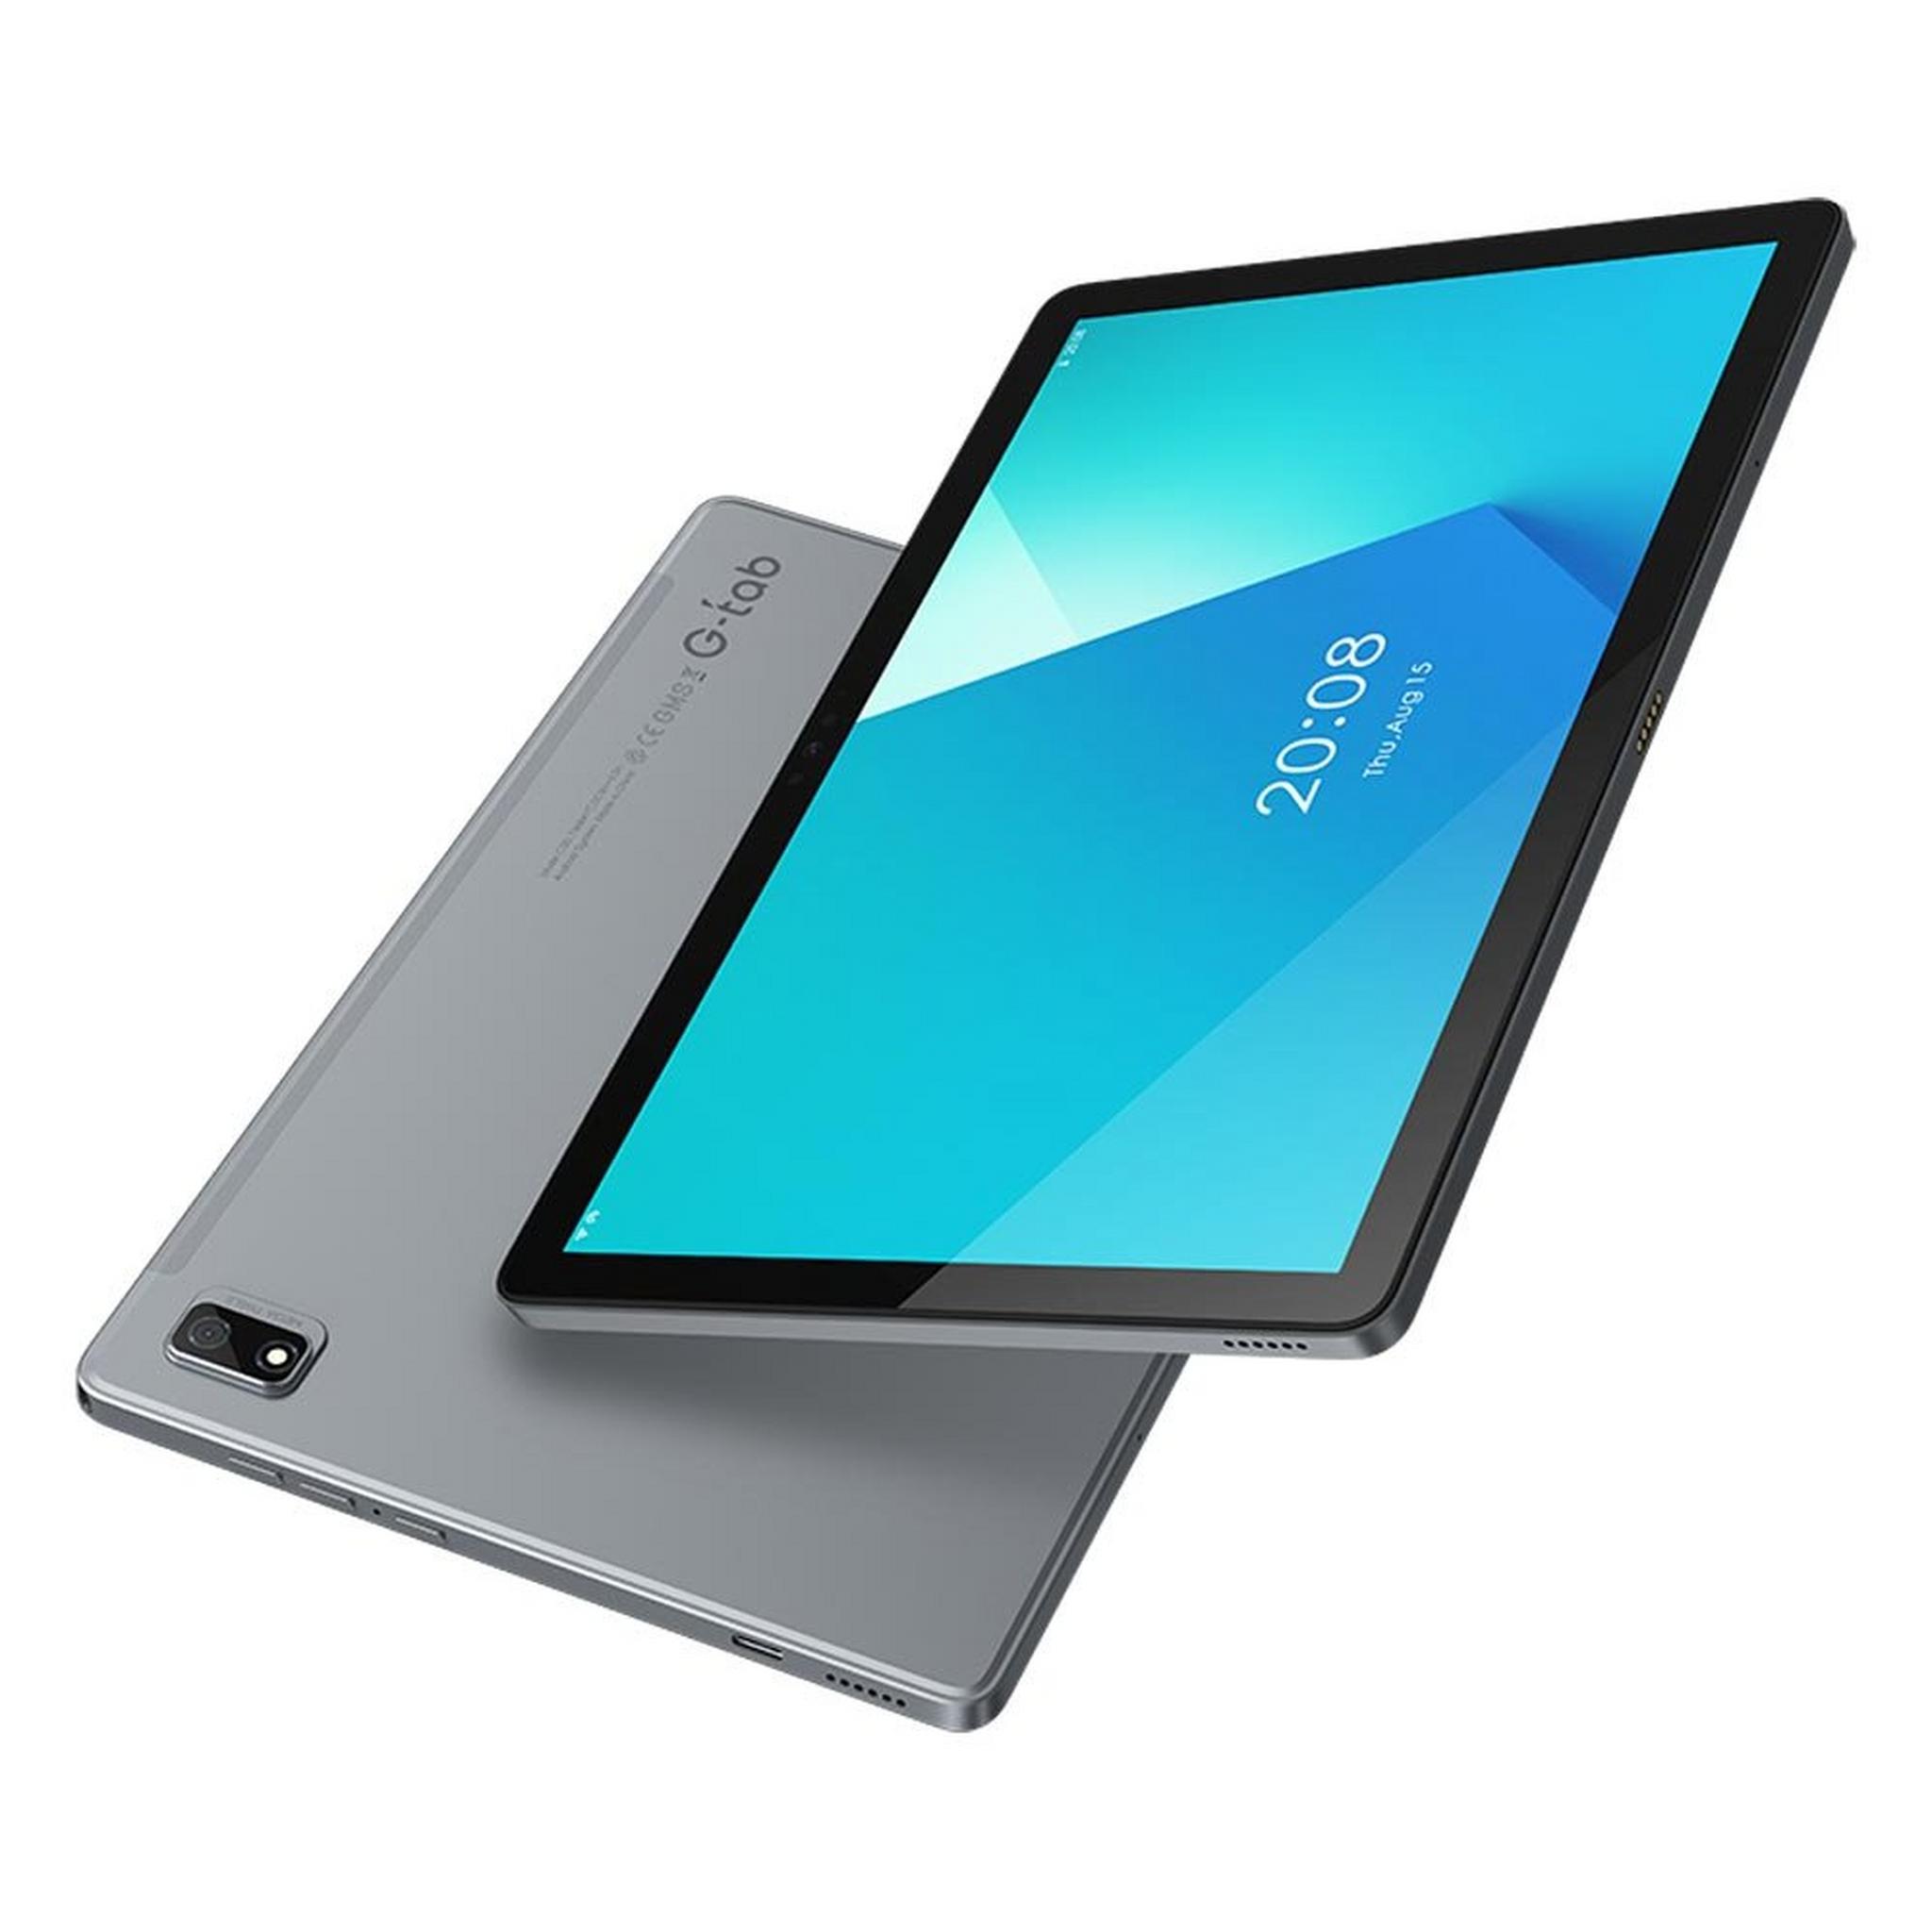 Gtab C30 Tablet, 10.1-inch, 8GB RAM,128GB Memory, 4G LTE – Grey